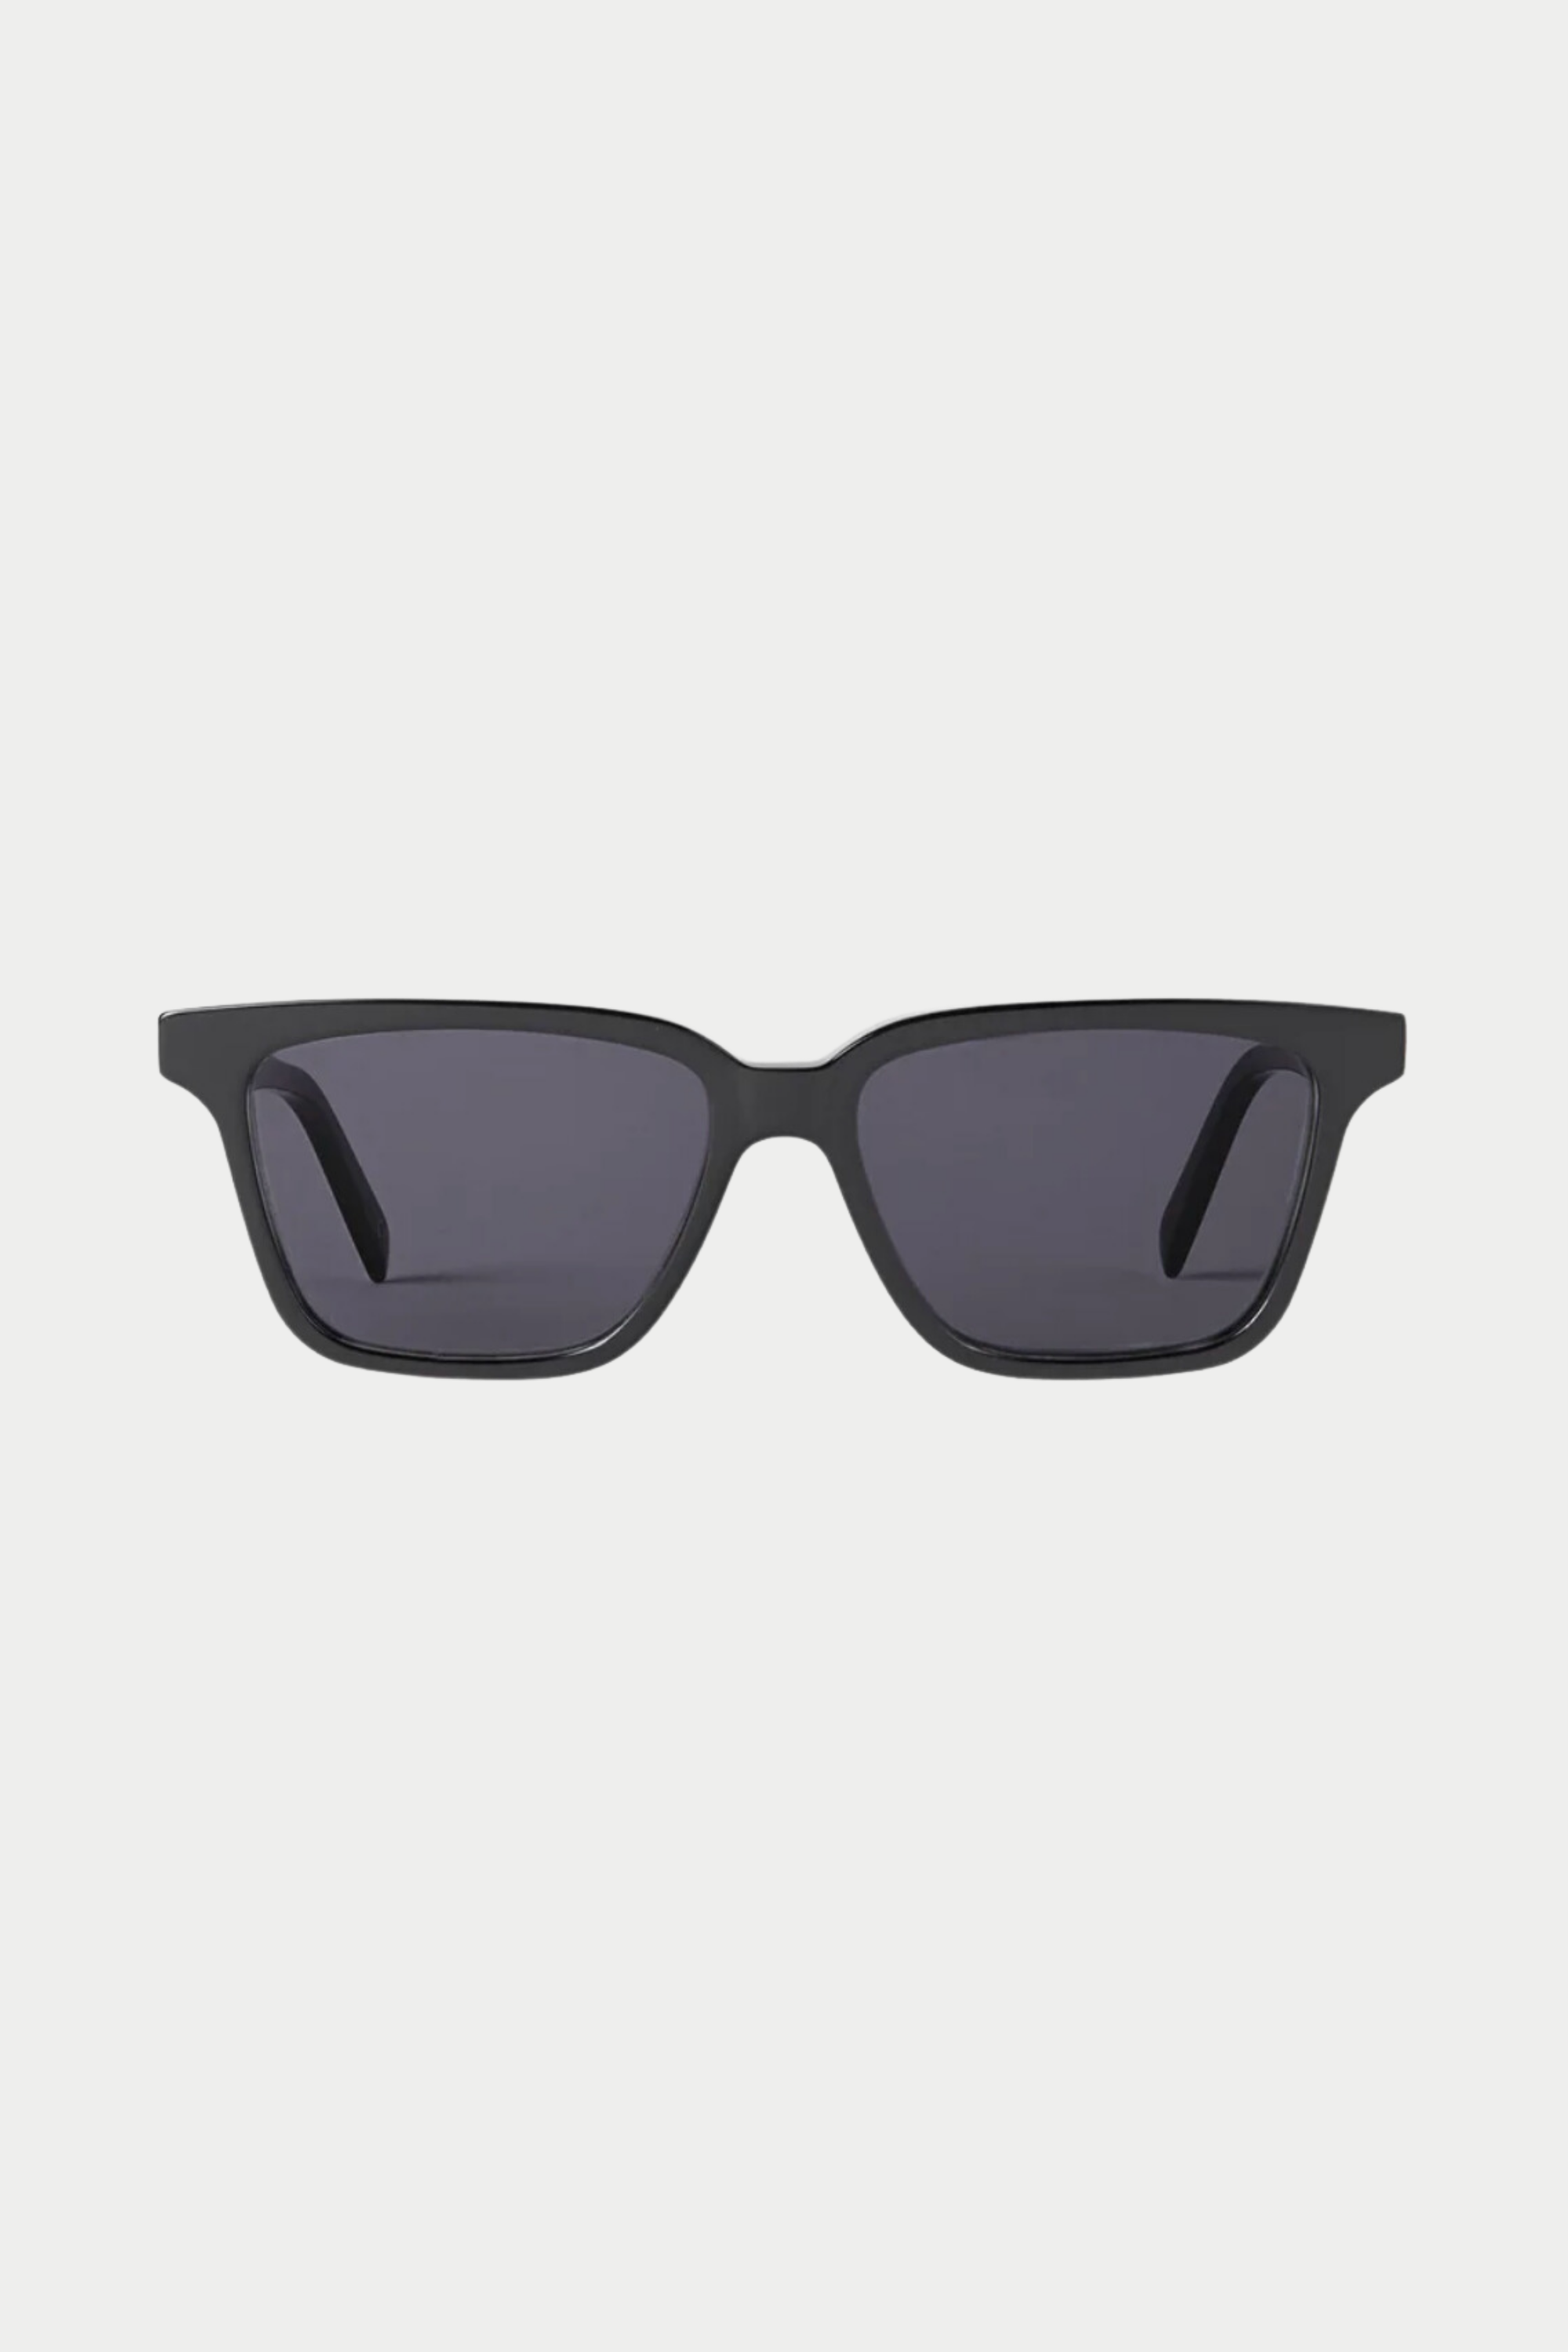 Versace Sunglasses Black Frame, Dark Grey Lenses, 0VE4409 GB1/87 53MM  8056597524292 | eBay